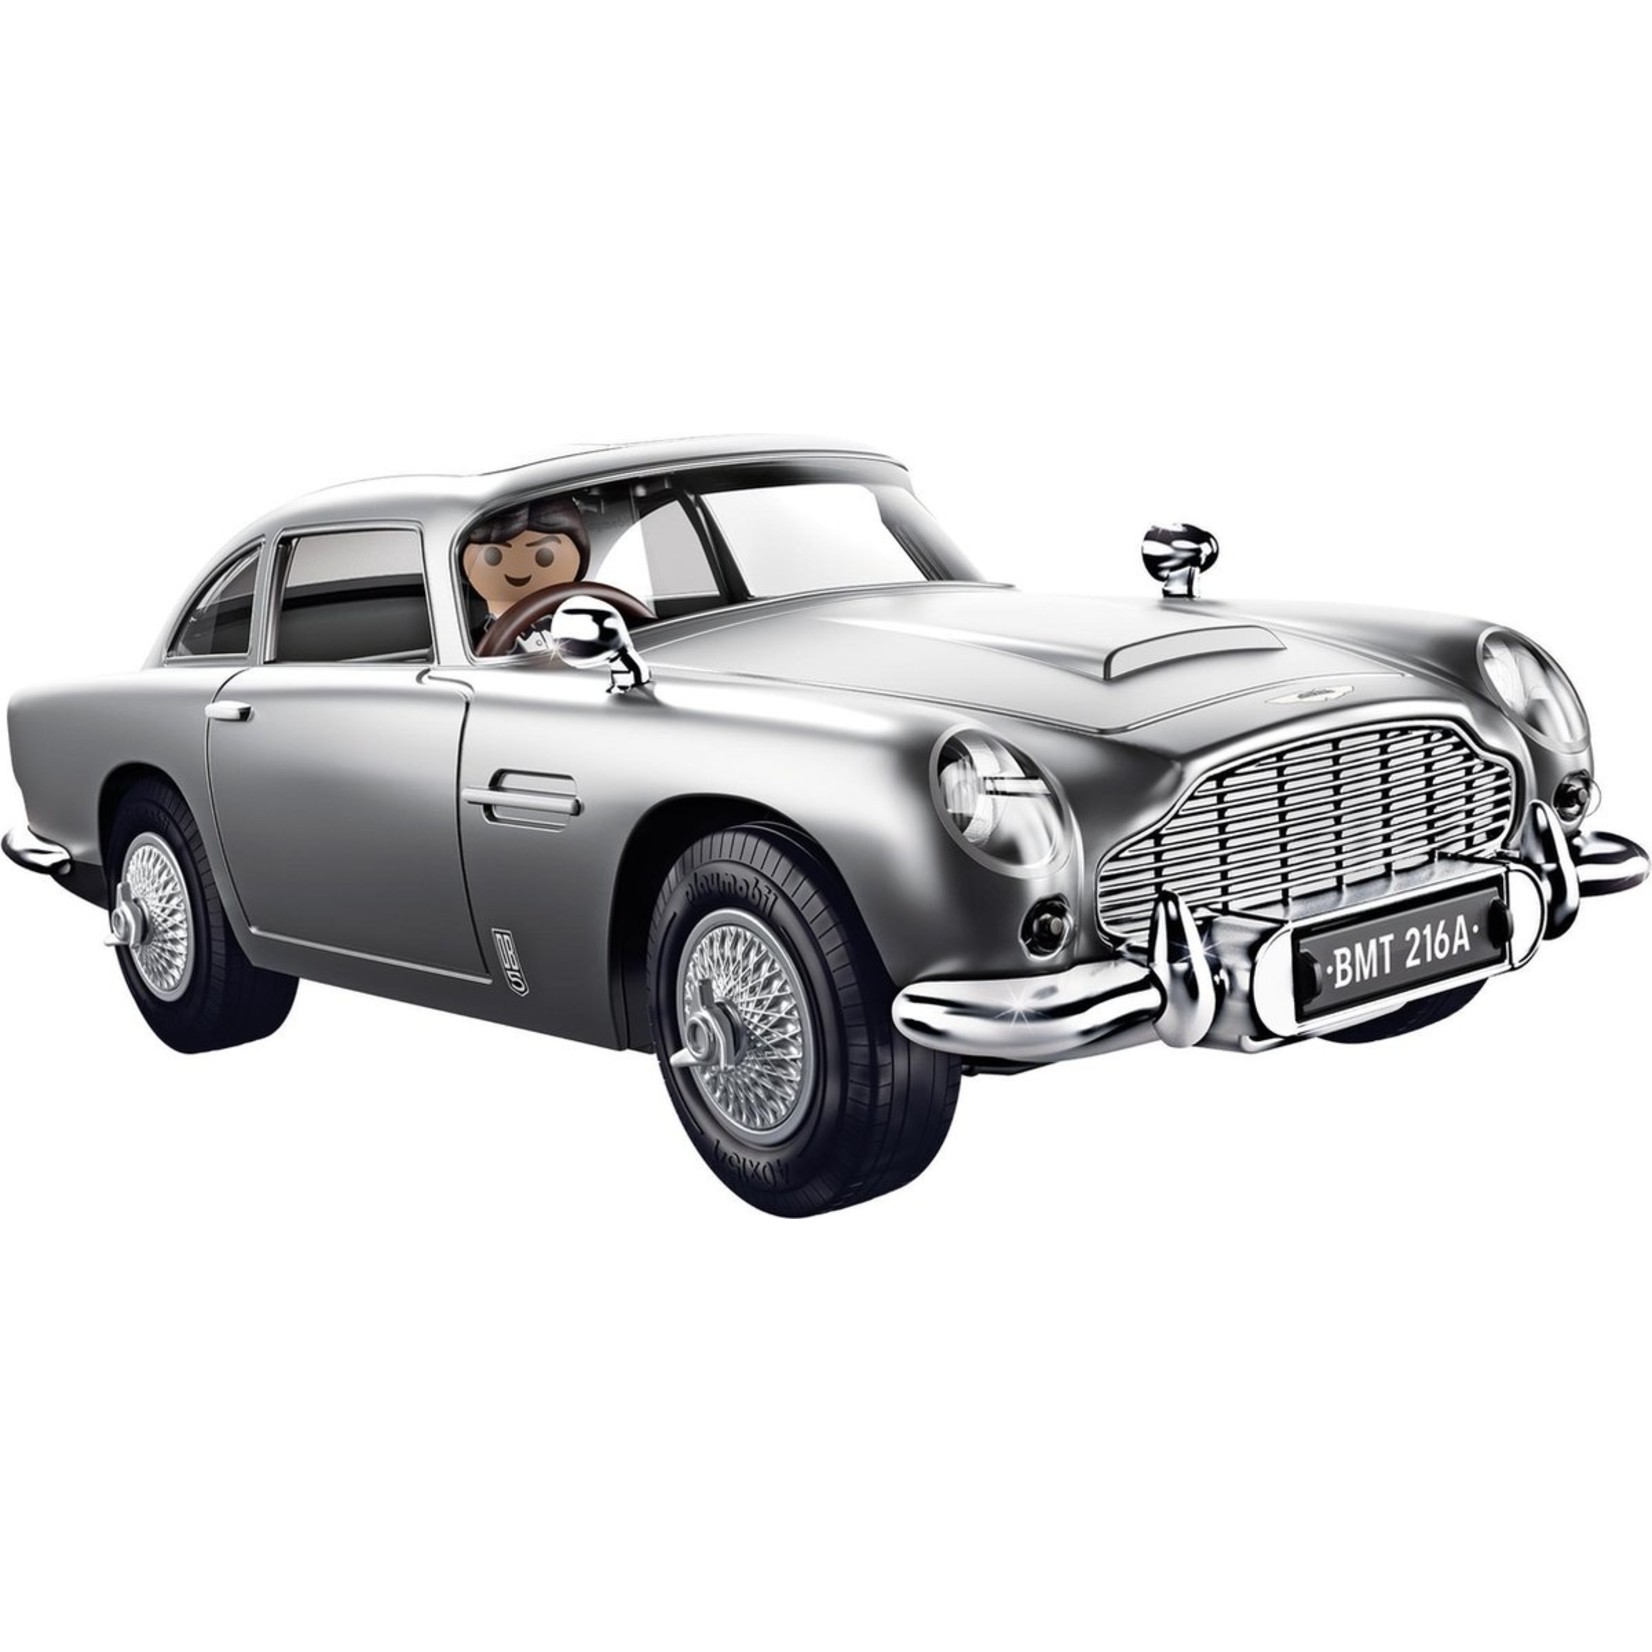 PLAYMOBIL PLAYMOBIL James Bond Aston Martin DB5 – Goldfinger Edition - 70578